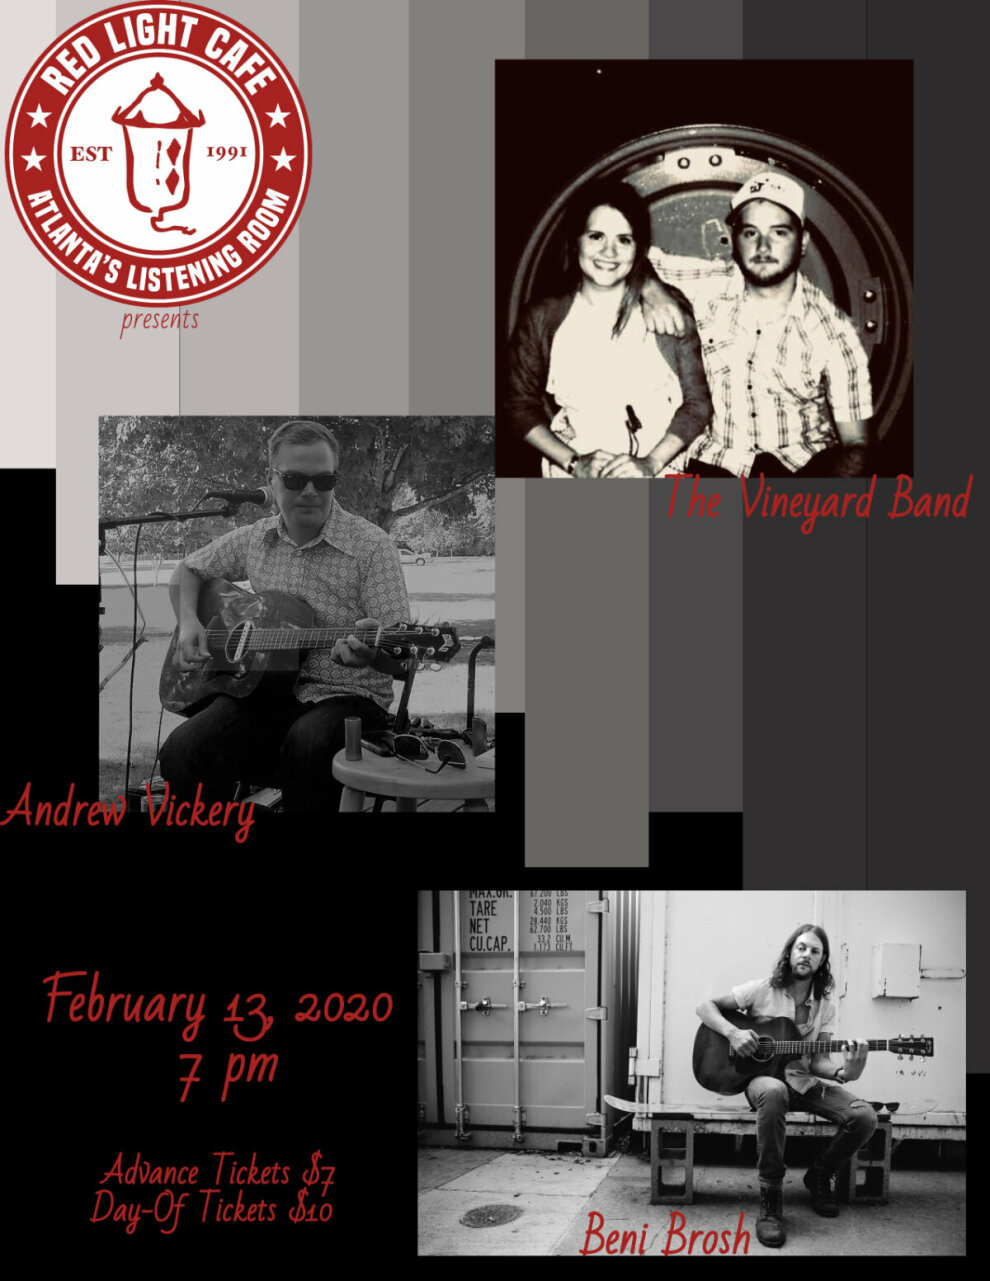 Andrew Vickery Beni Brosh The Vineyard Band At Red Light Cafe Atlanta Ga Feb 13 2020 Poster 1200